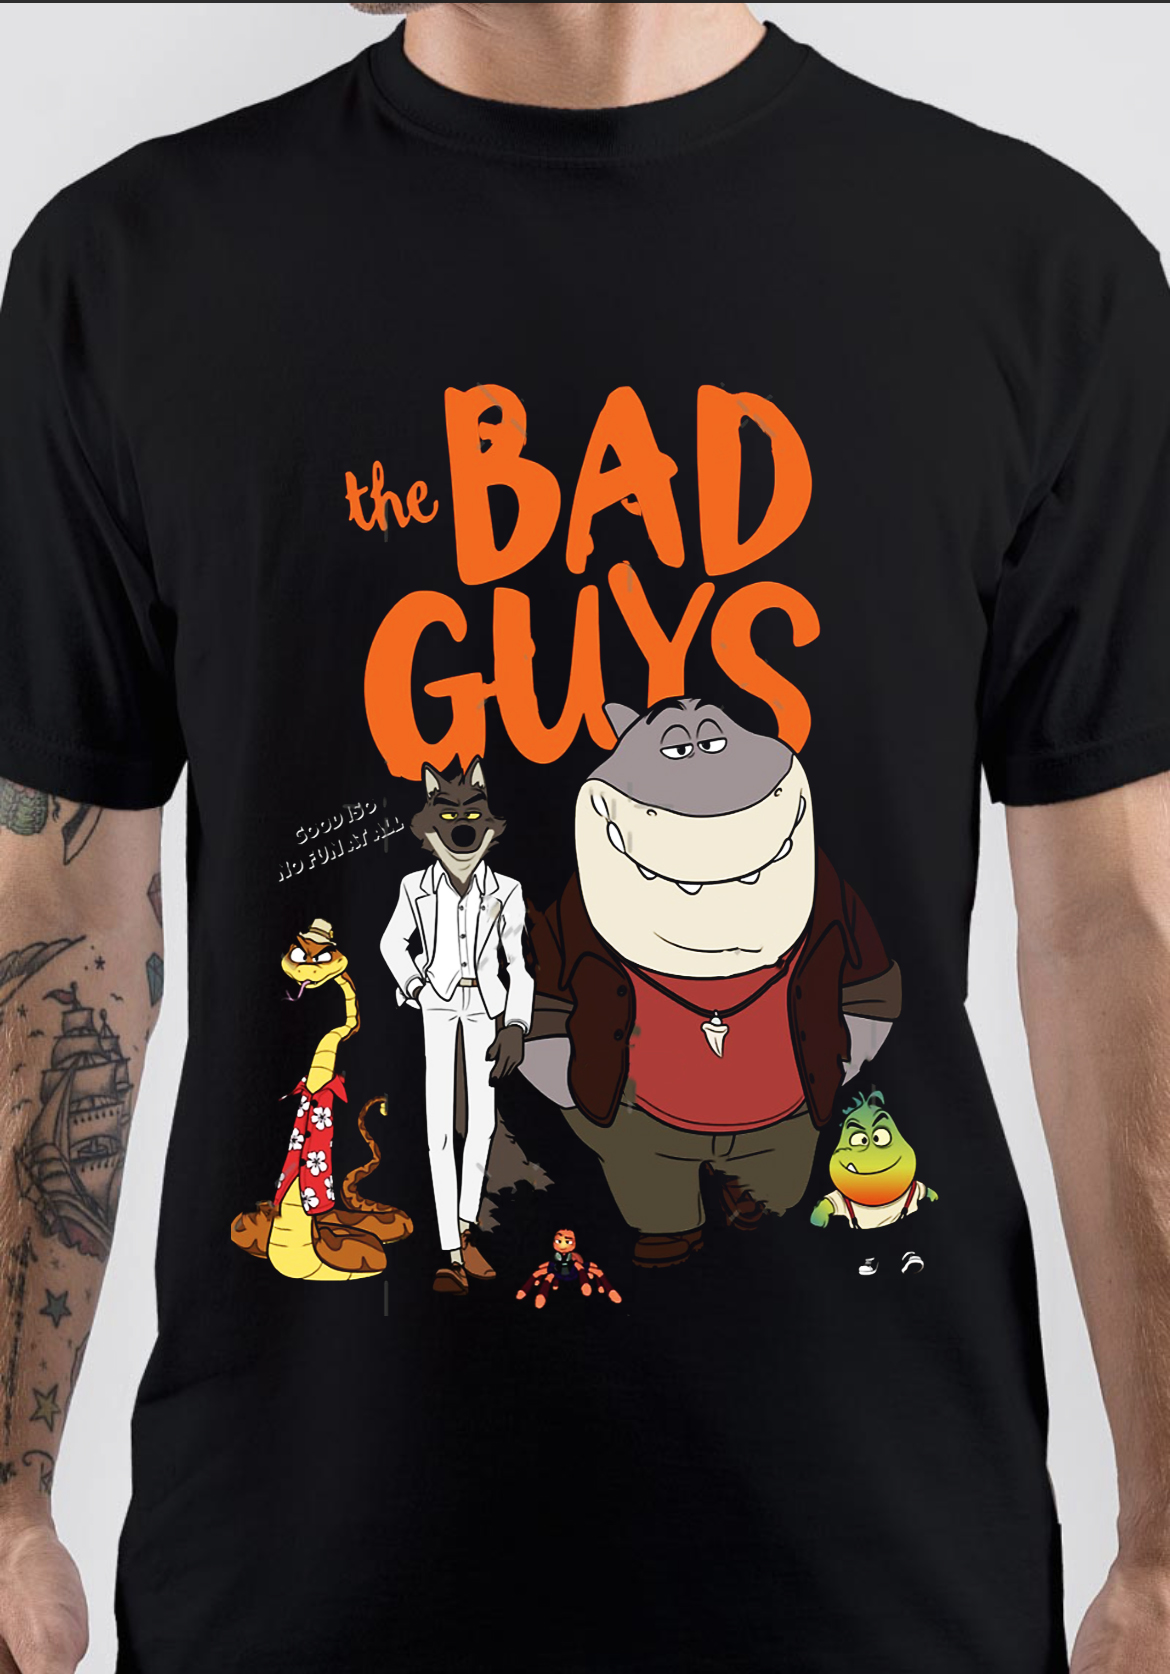 The Bad Guys T-Shirt And Merchandise